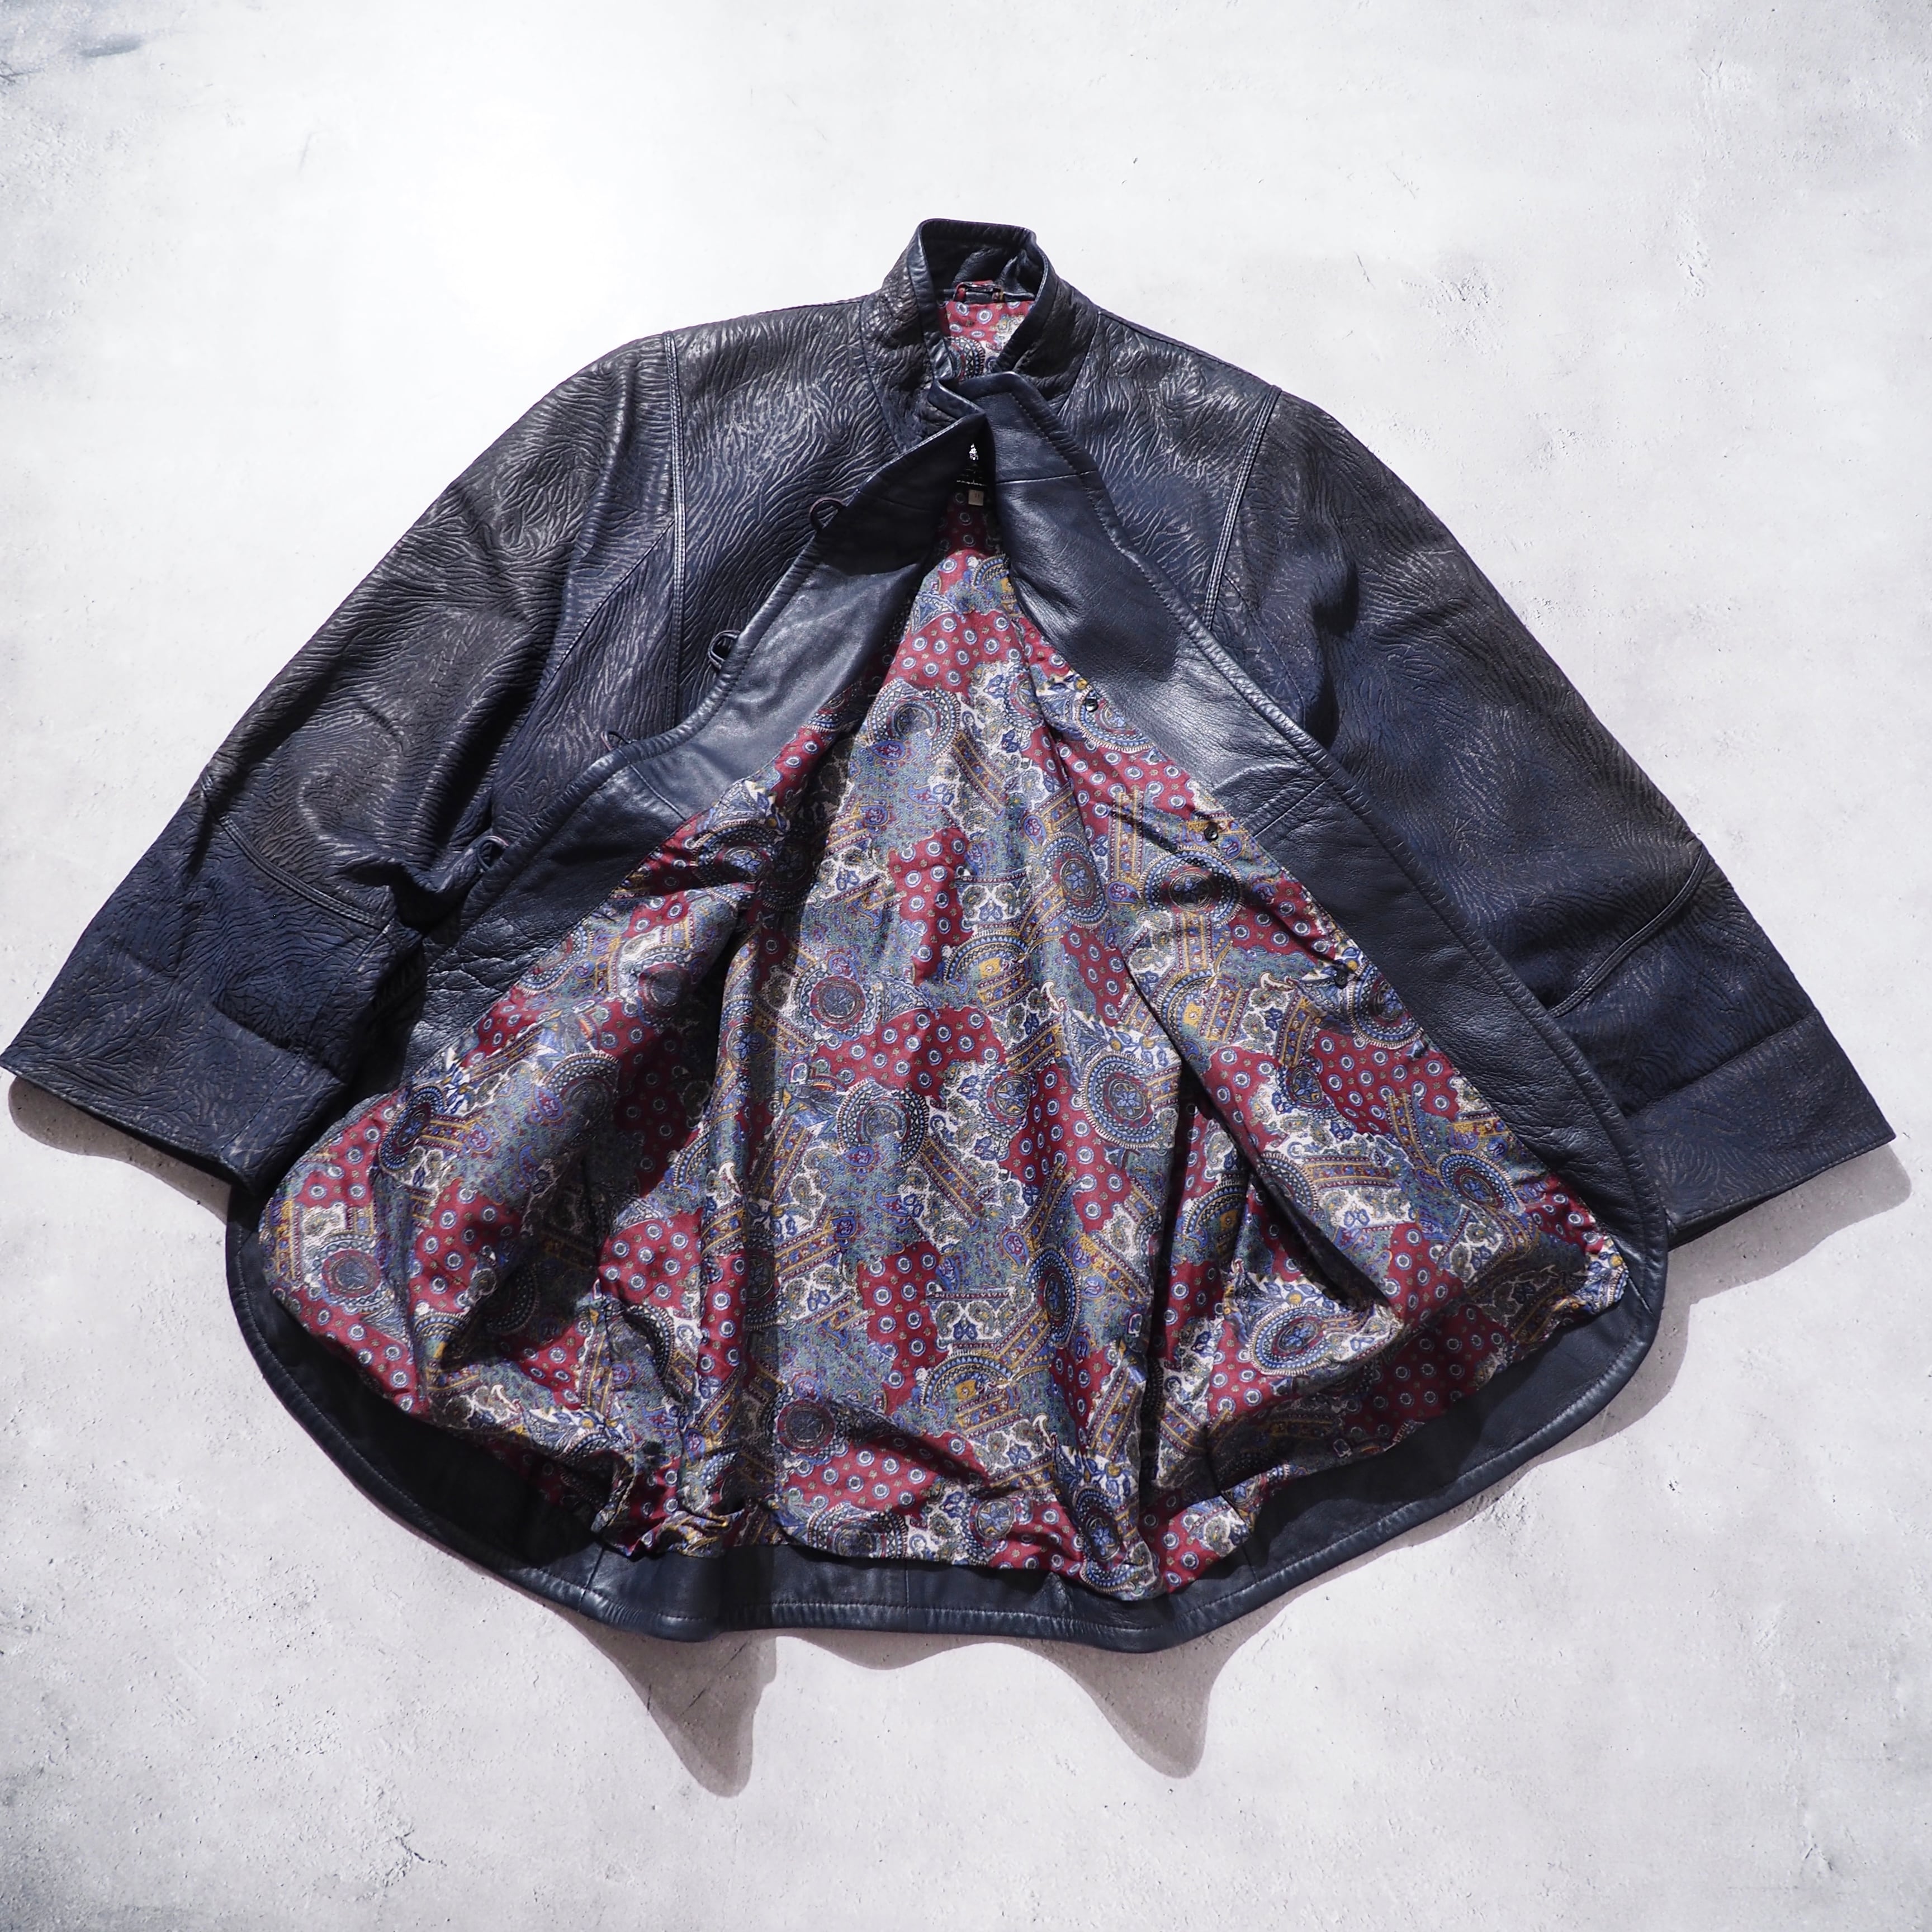 ” Adarcrea ” deformation mao collar silhouette vintage leather jacket